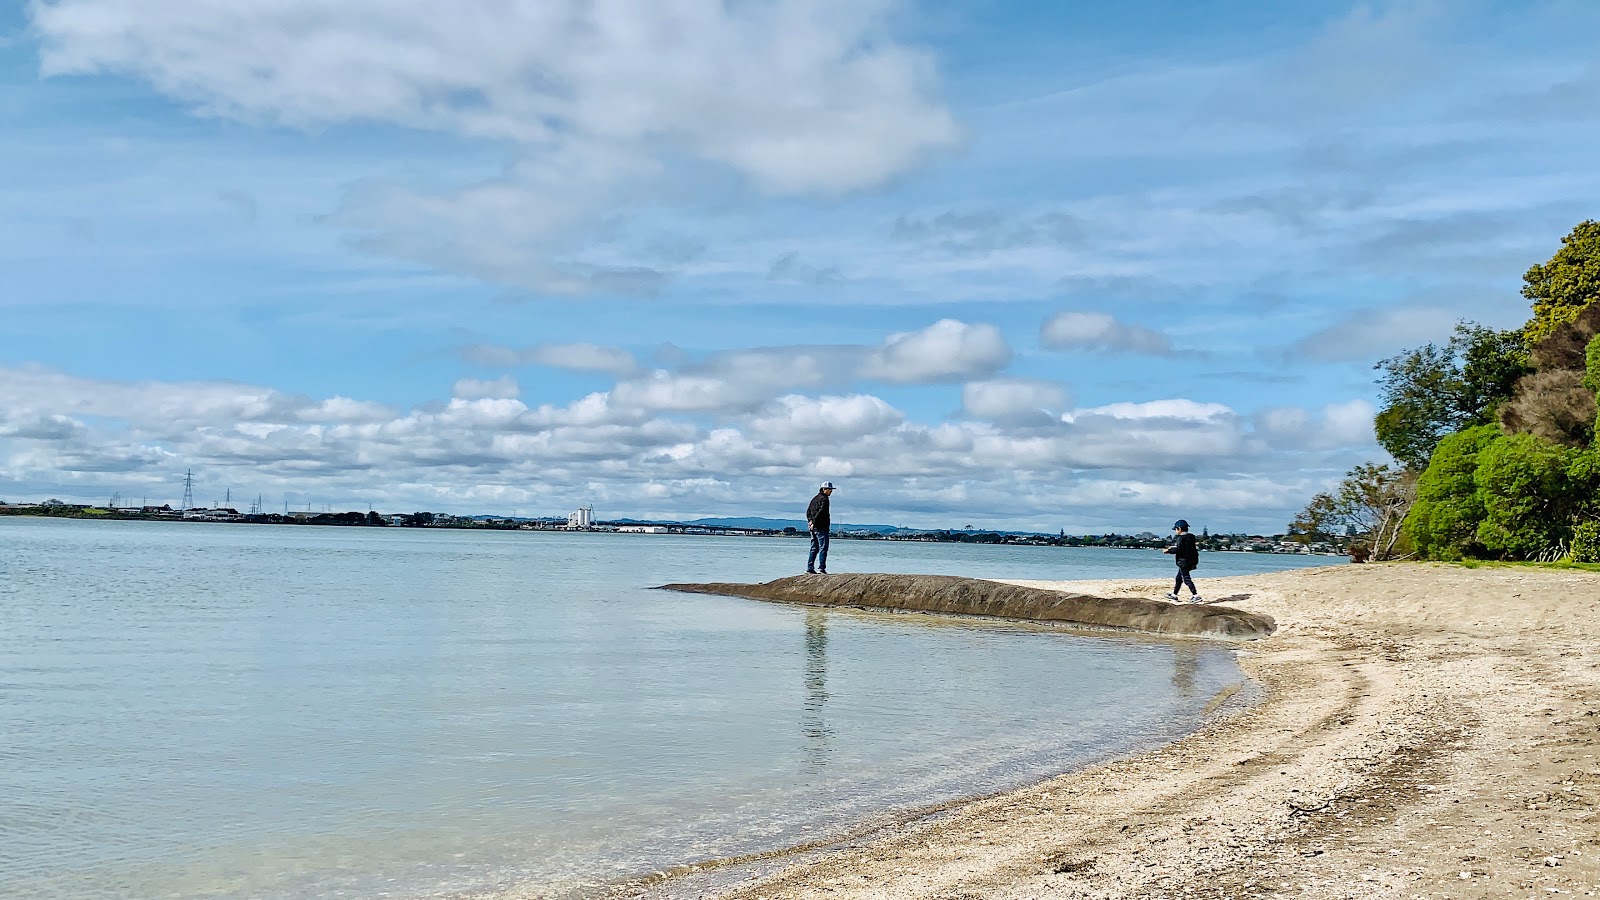 Foto di Taylors Bay con una superficie del sabbia con ciottolame